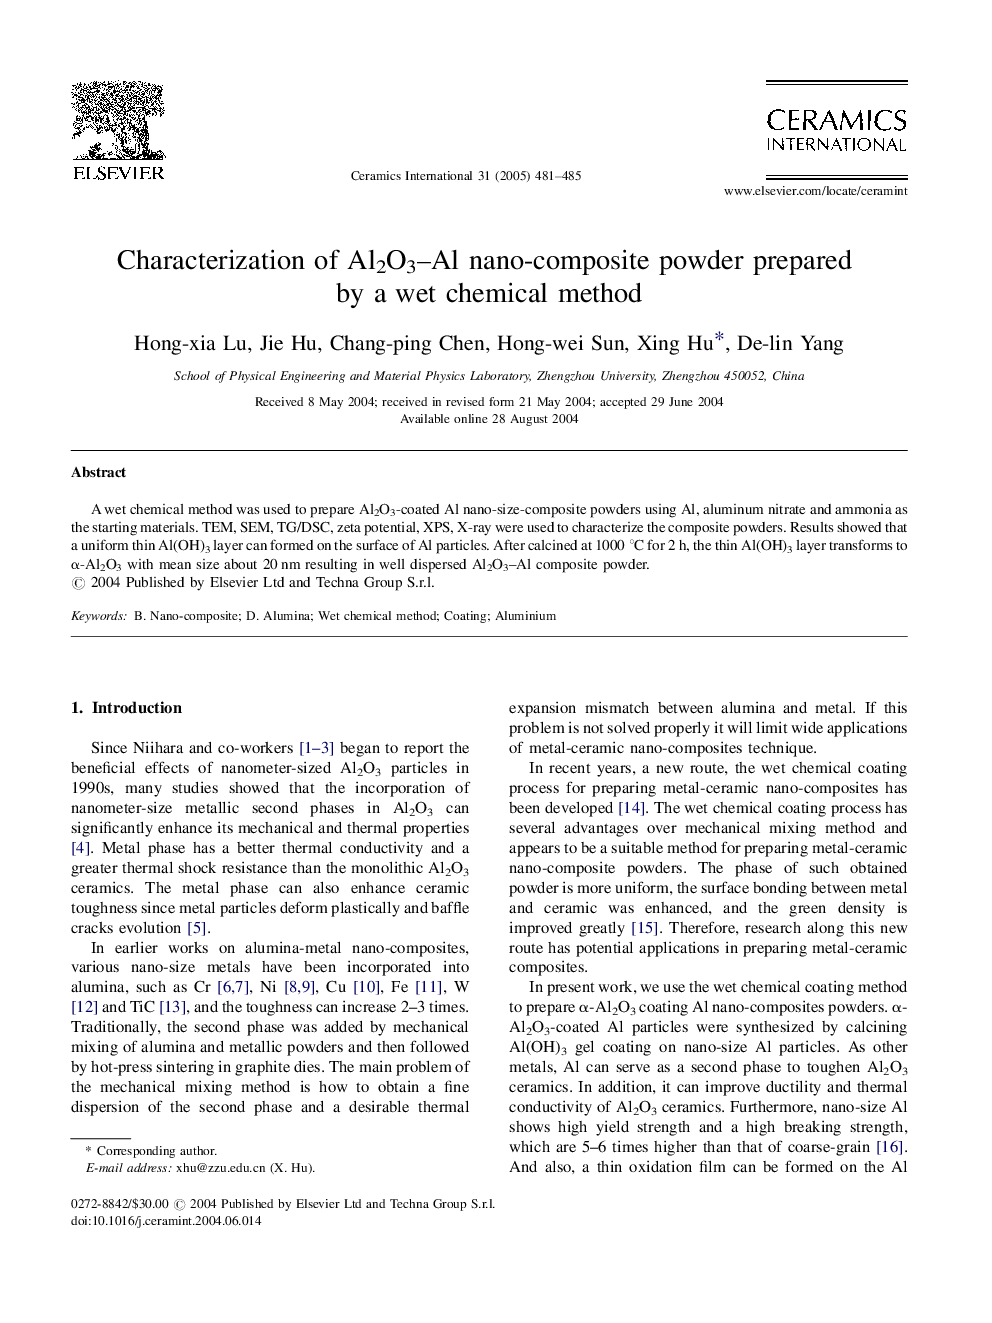 Characterization of Al2O3-Al nano-composite powder prepared by a wet chemical method